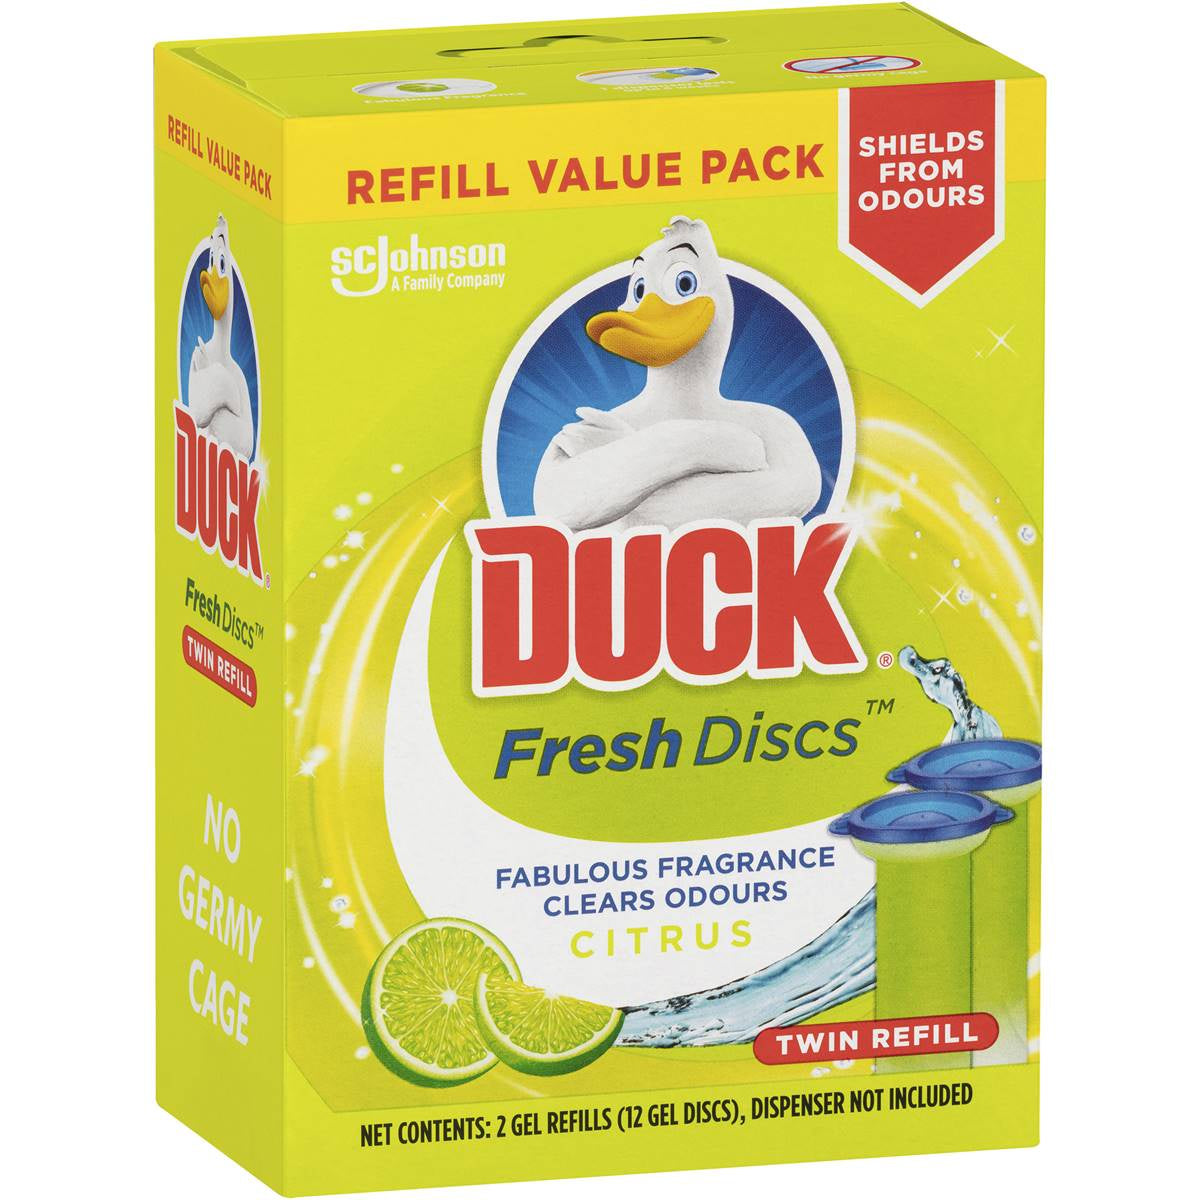 Duck Toilet Fresh Disks Citrus Twin Refill